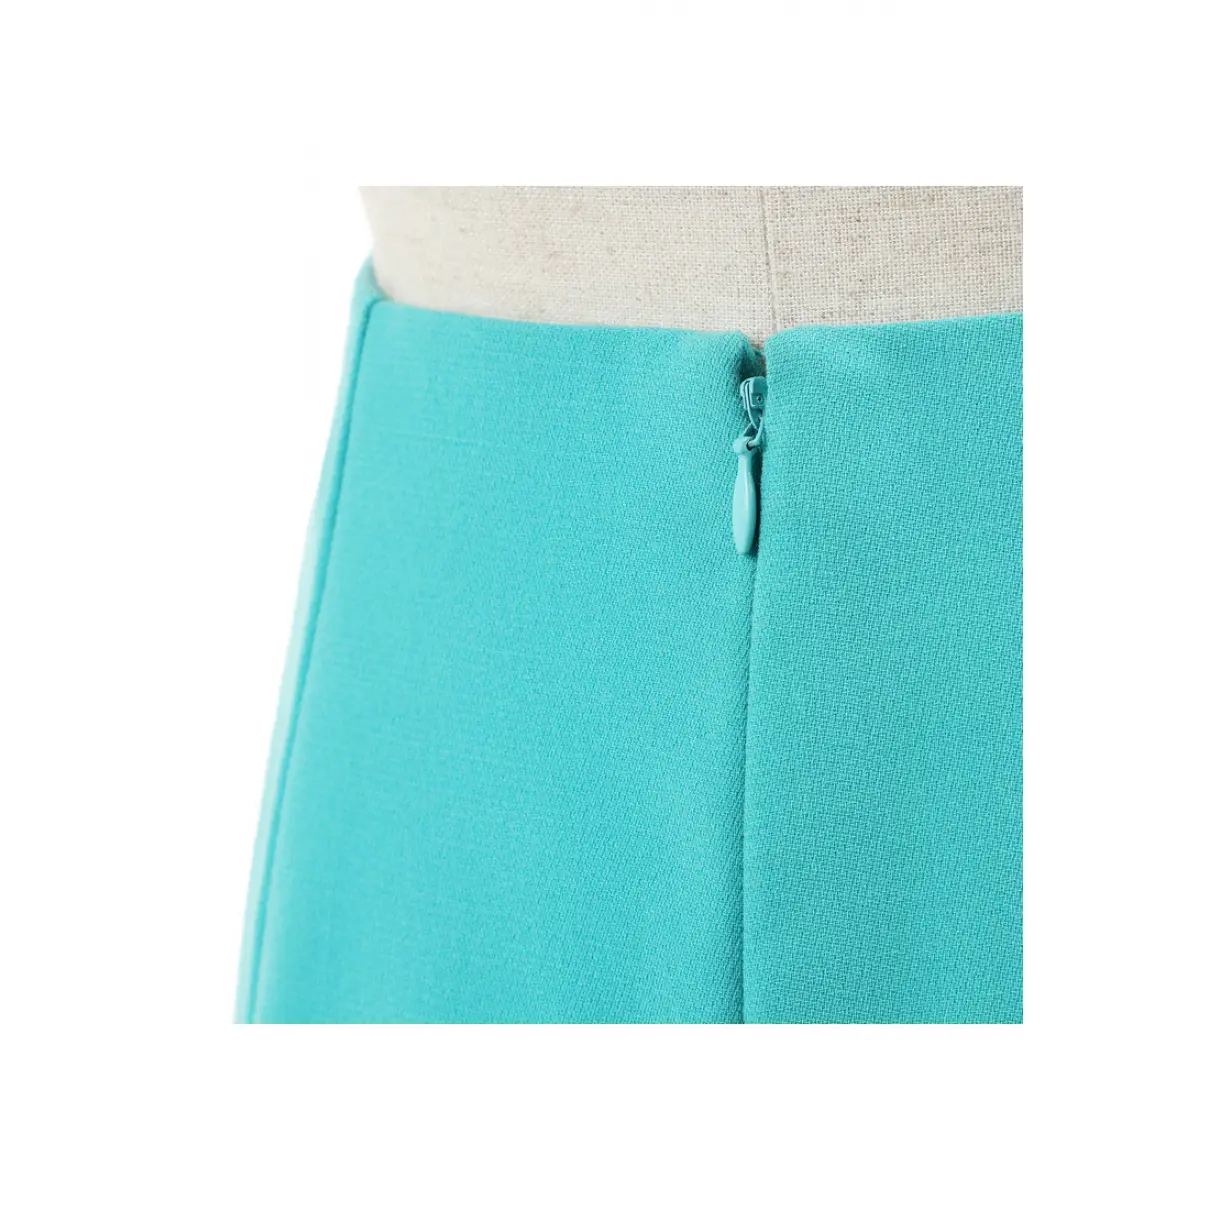 Wool mid-length skirt Gianni Versace - Vintage